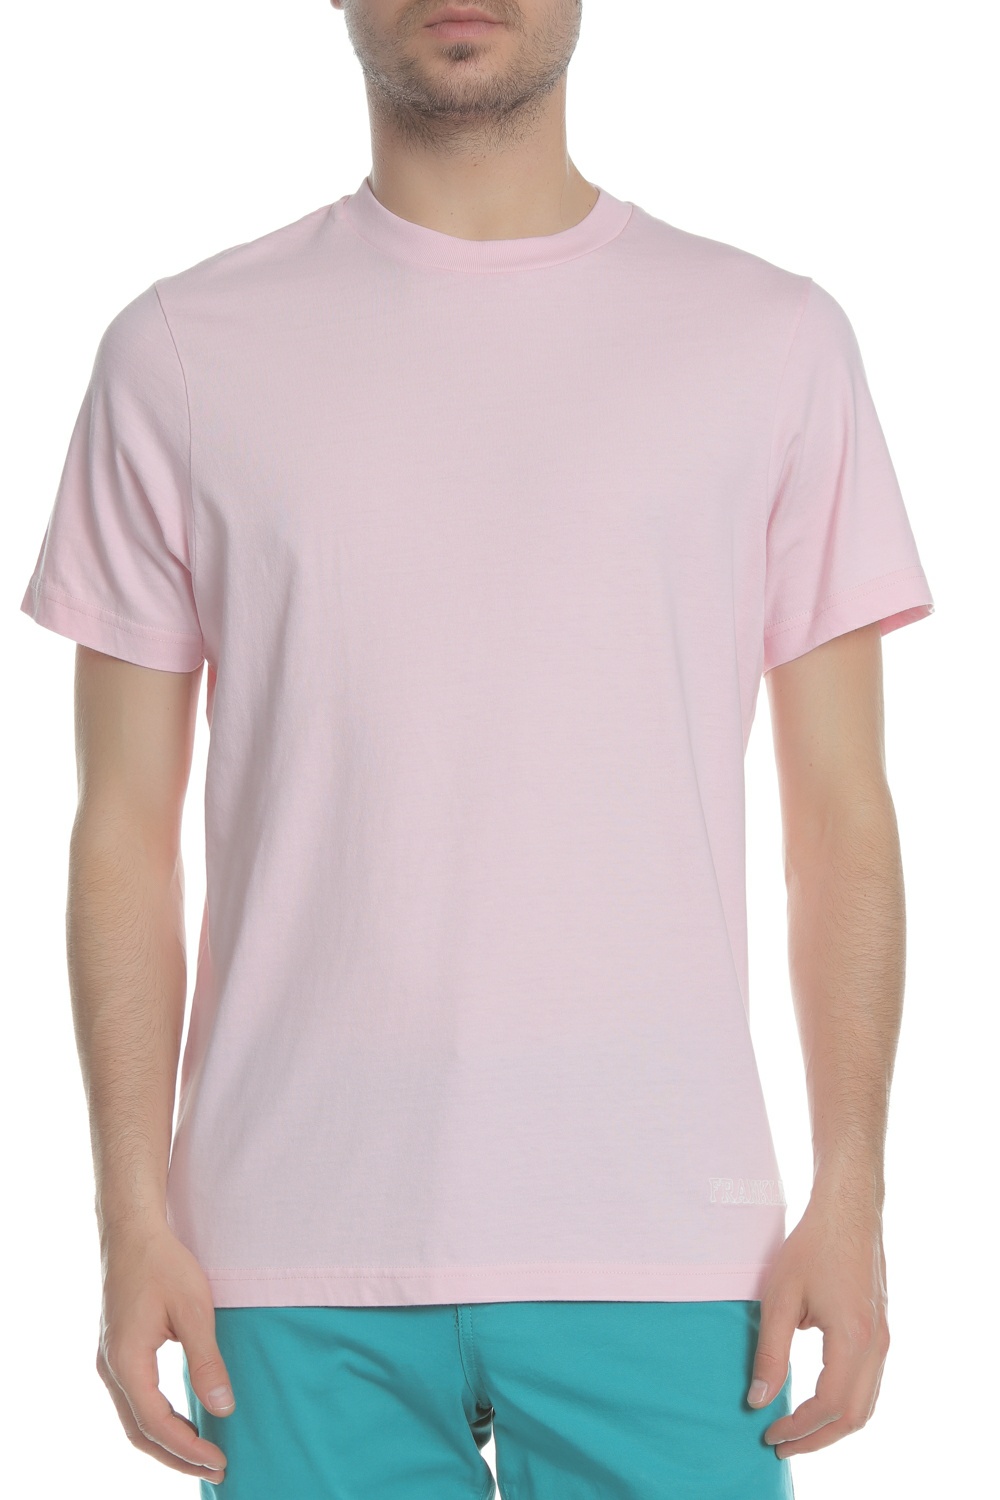 FRANKLIN & MARSHALL - Ανδρική κοντομάνικη μπλούζα FRANKLIN & MARSHALL ροζ Ανδρικά/Ρούχα/Μπλούζες/Κοντομάνικες